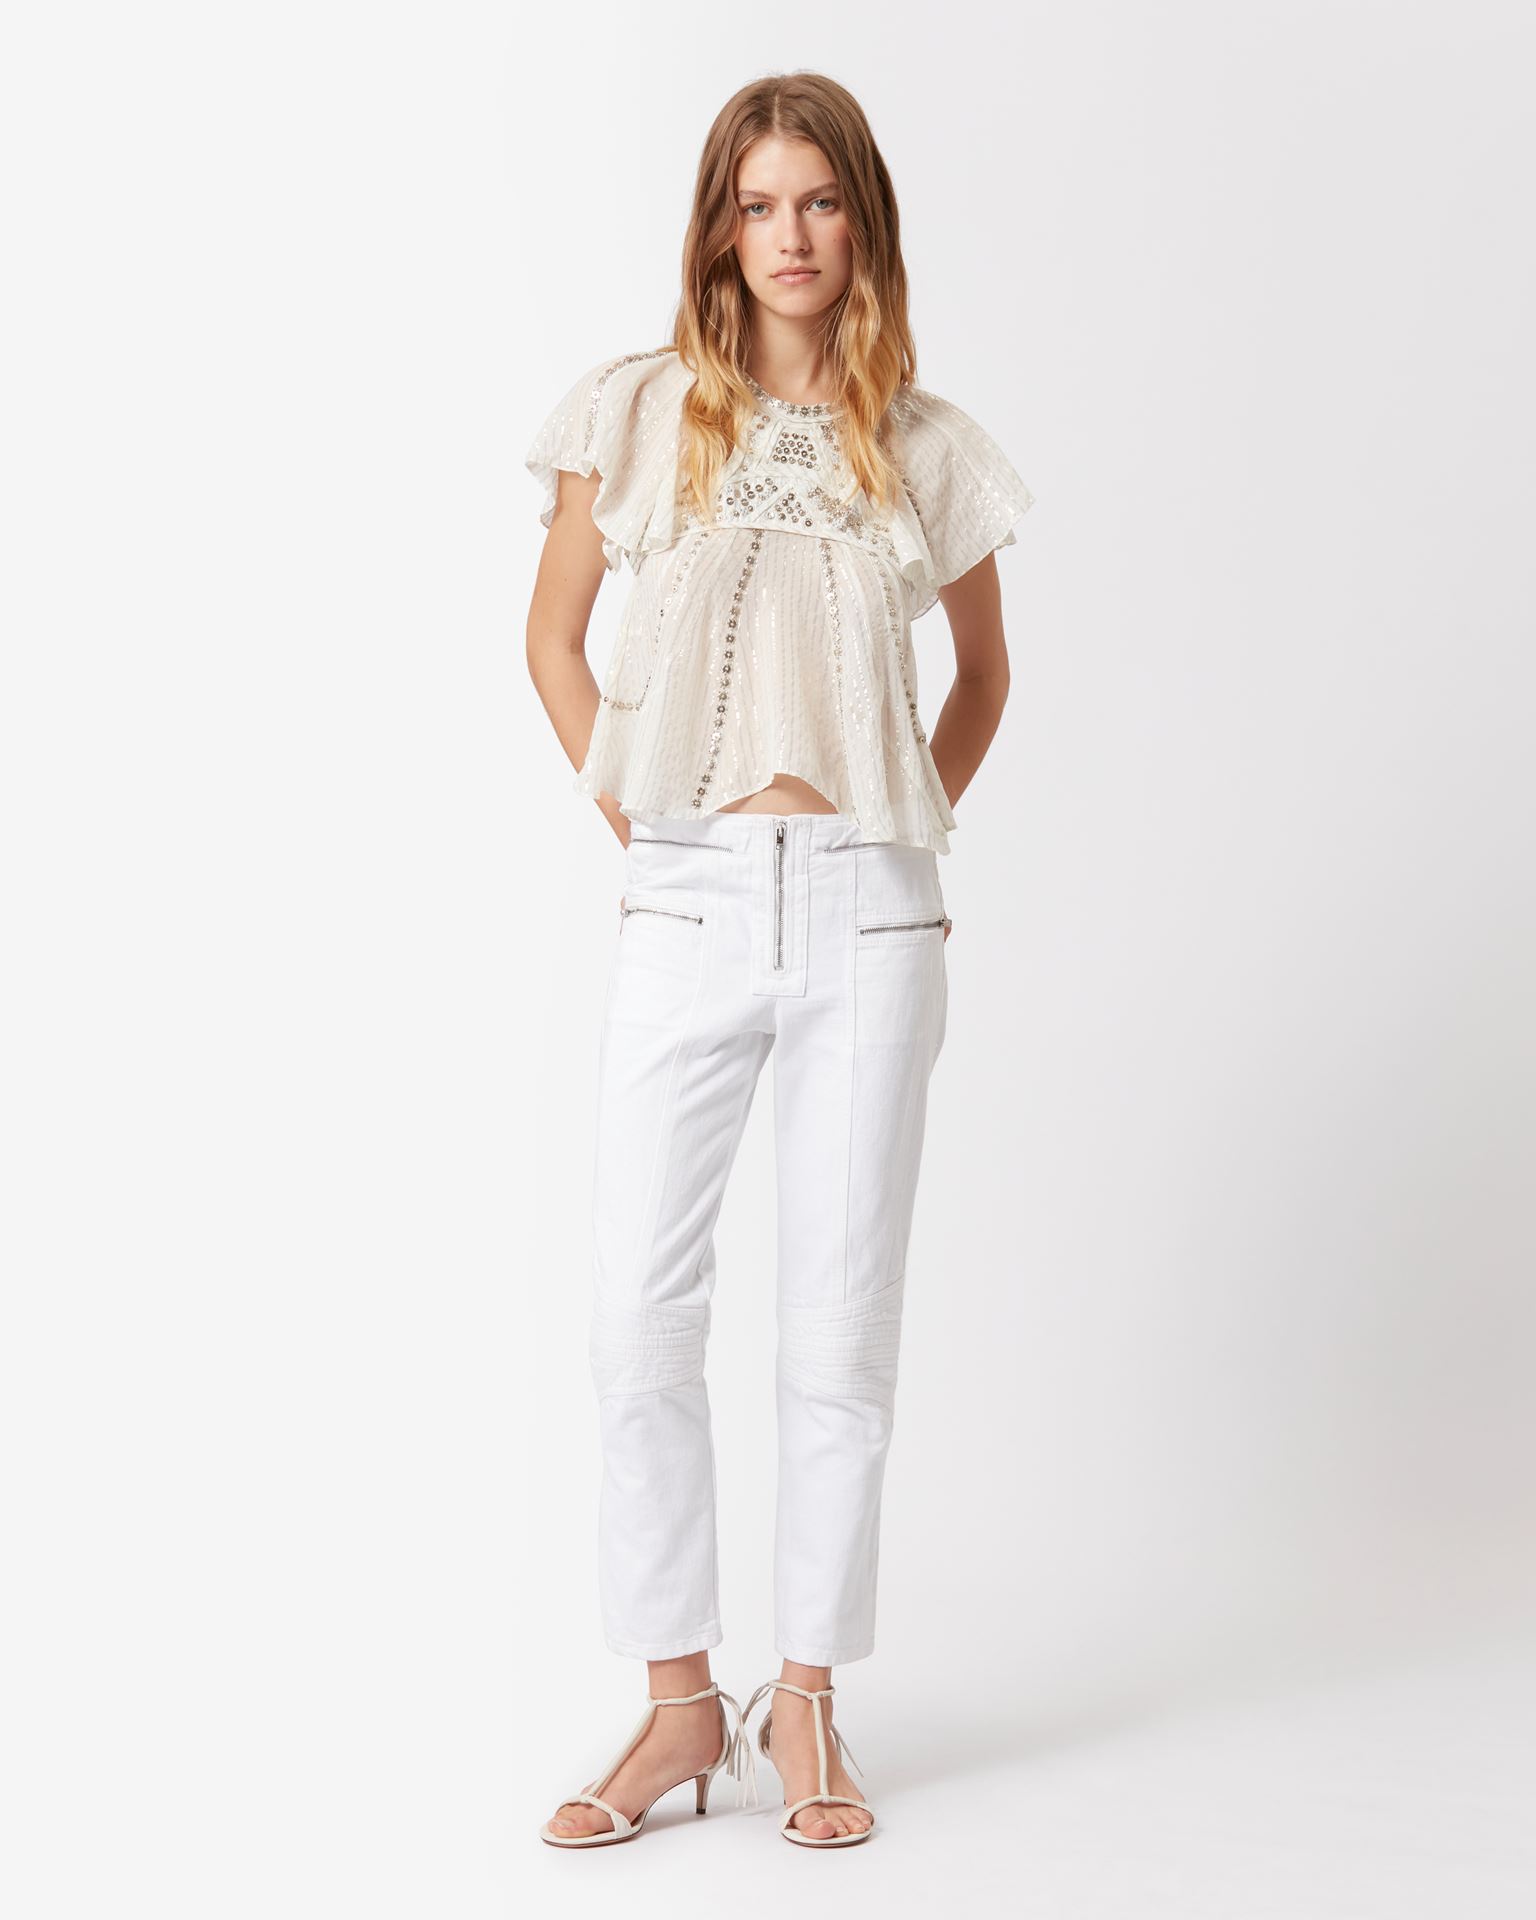 Isabel Marant, Loma Jeans - Women - White